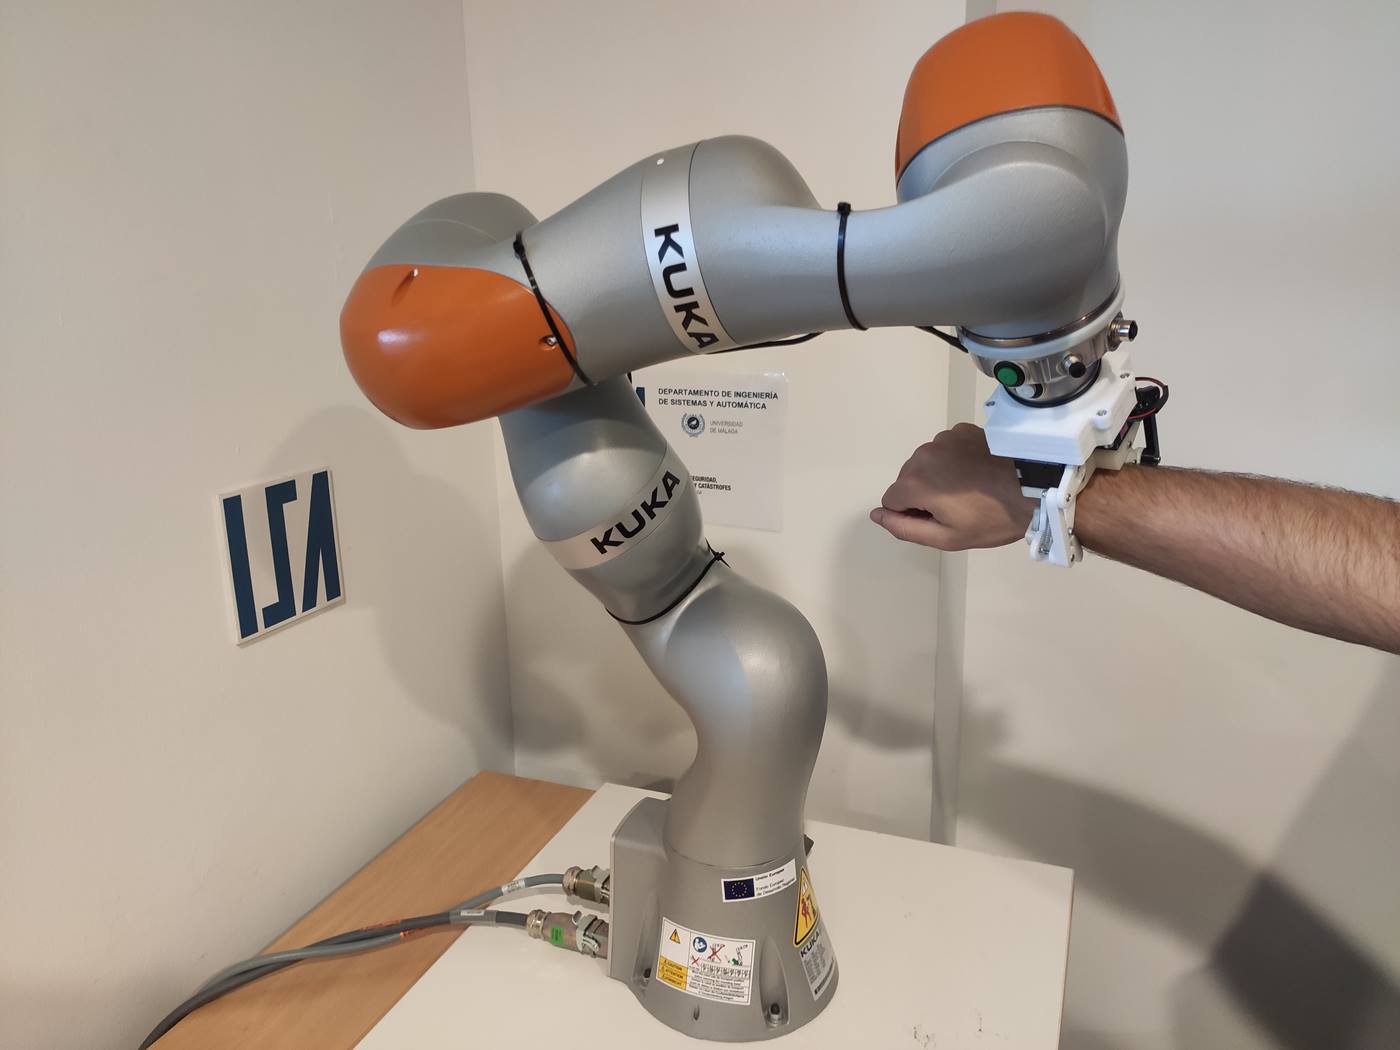 Robot grasping a hand